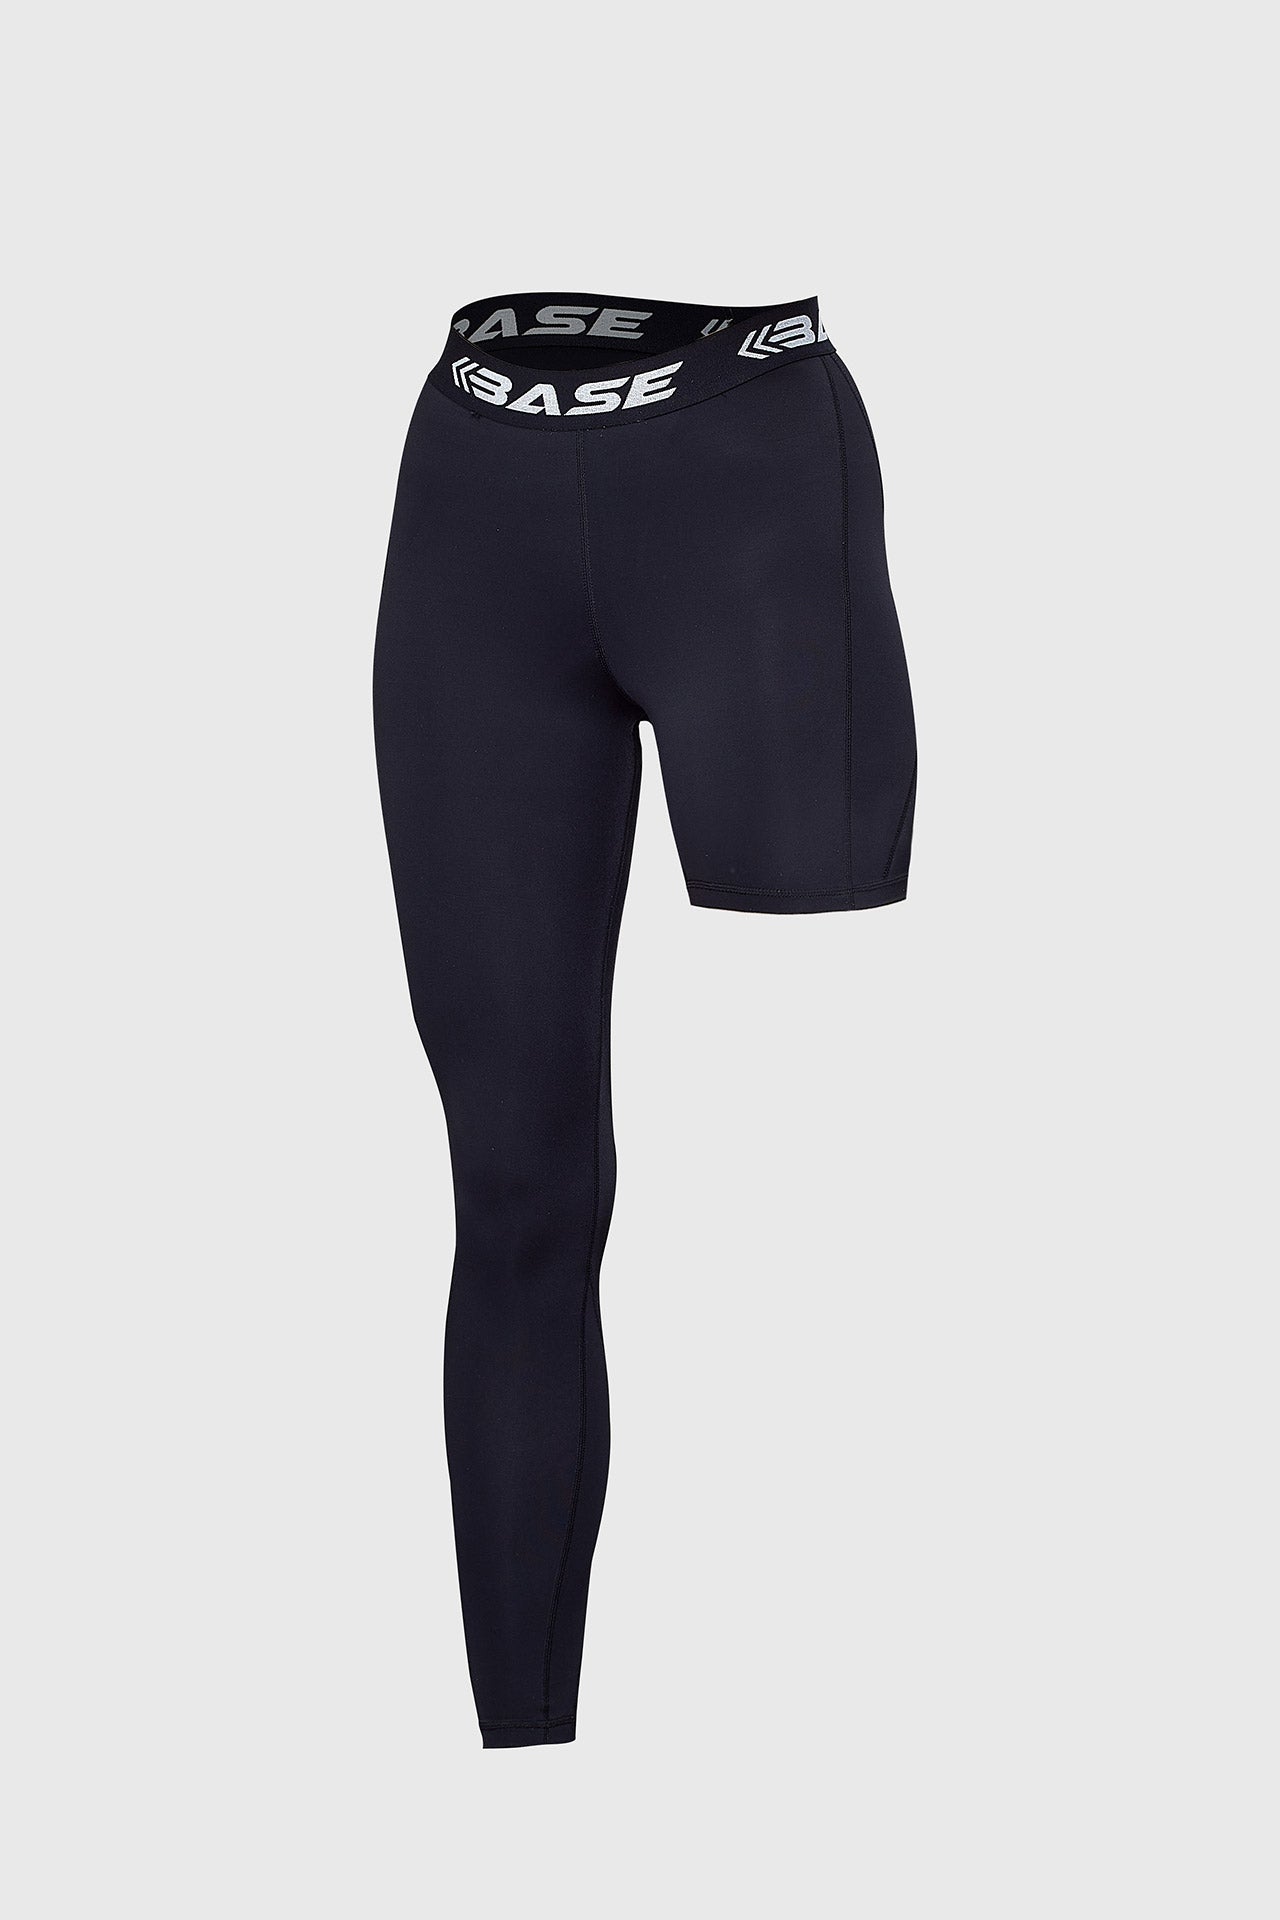 Buy Under Armour Women's UA Armour Sport Woven Pants Black in KSA -SSS